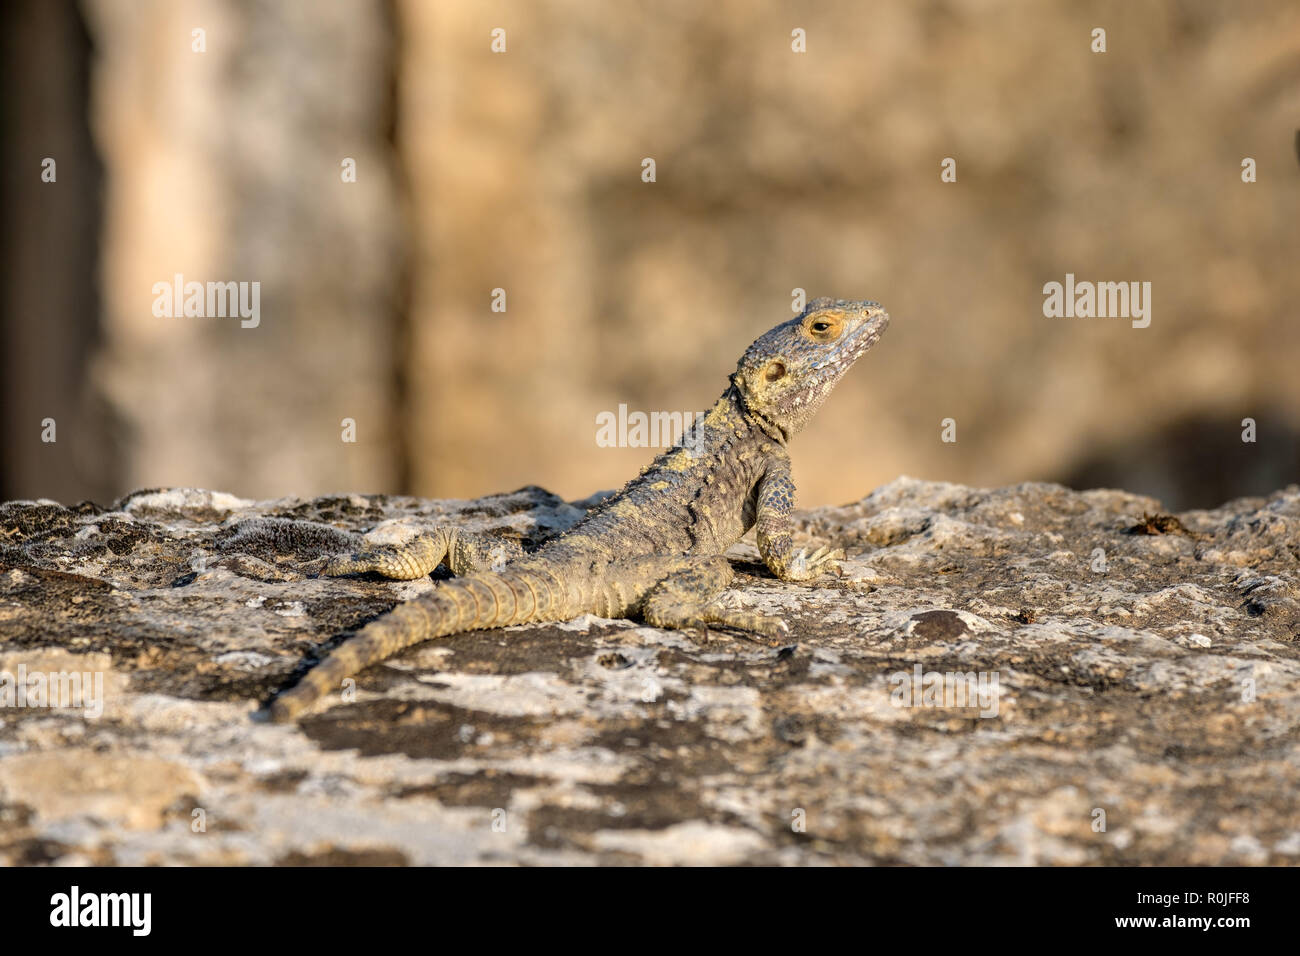 Lizard sun bathing on top of a rock Stock Photo